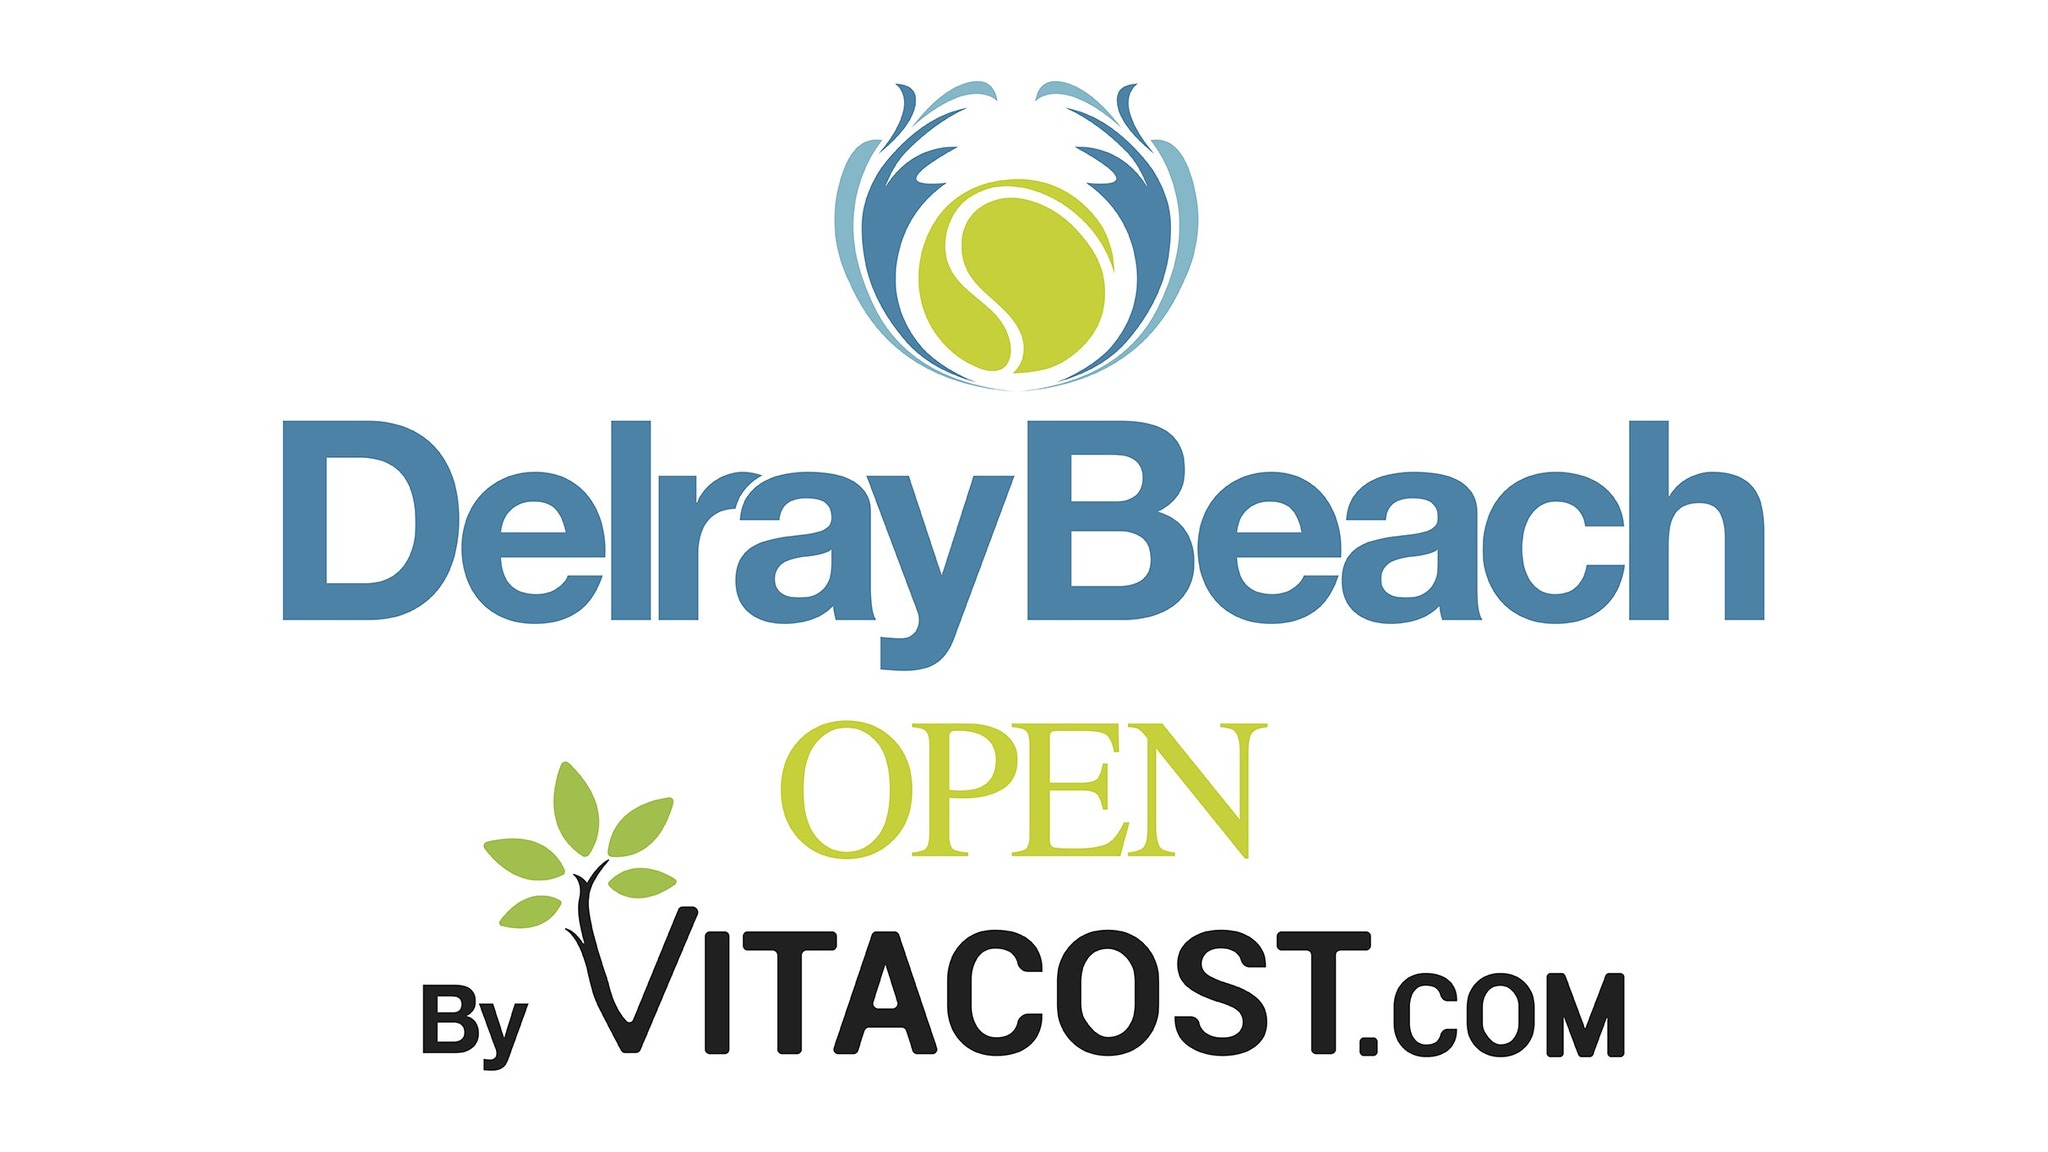 Delray Beach Open Tickets Single Game Tickets & Schedule